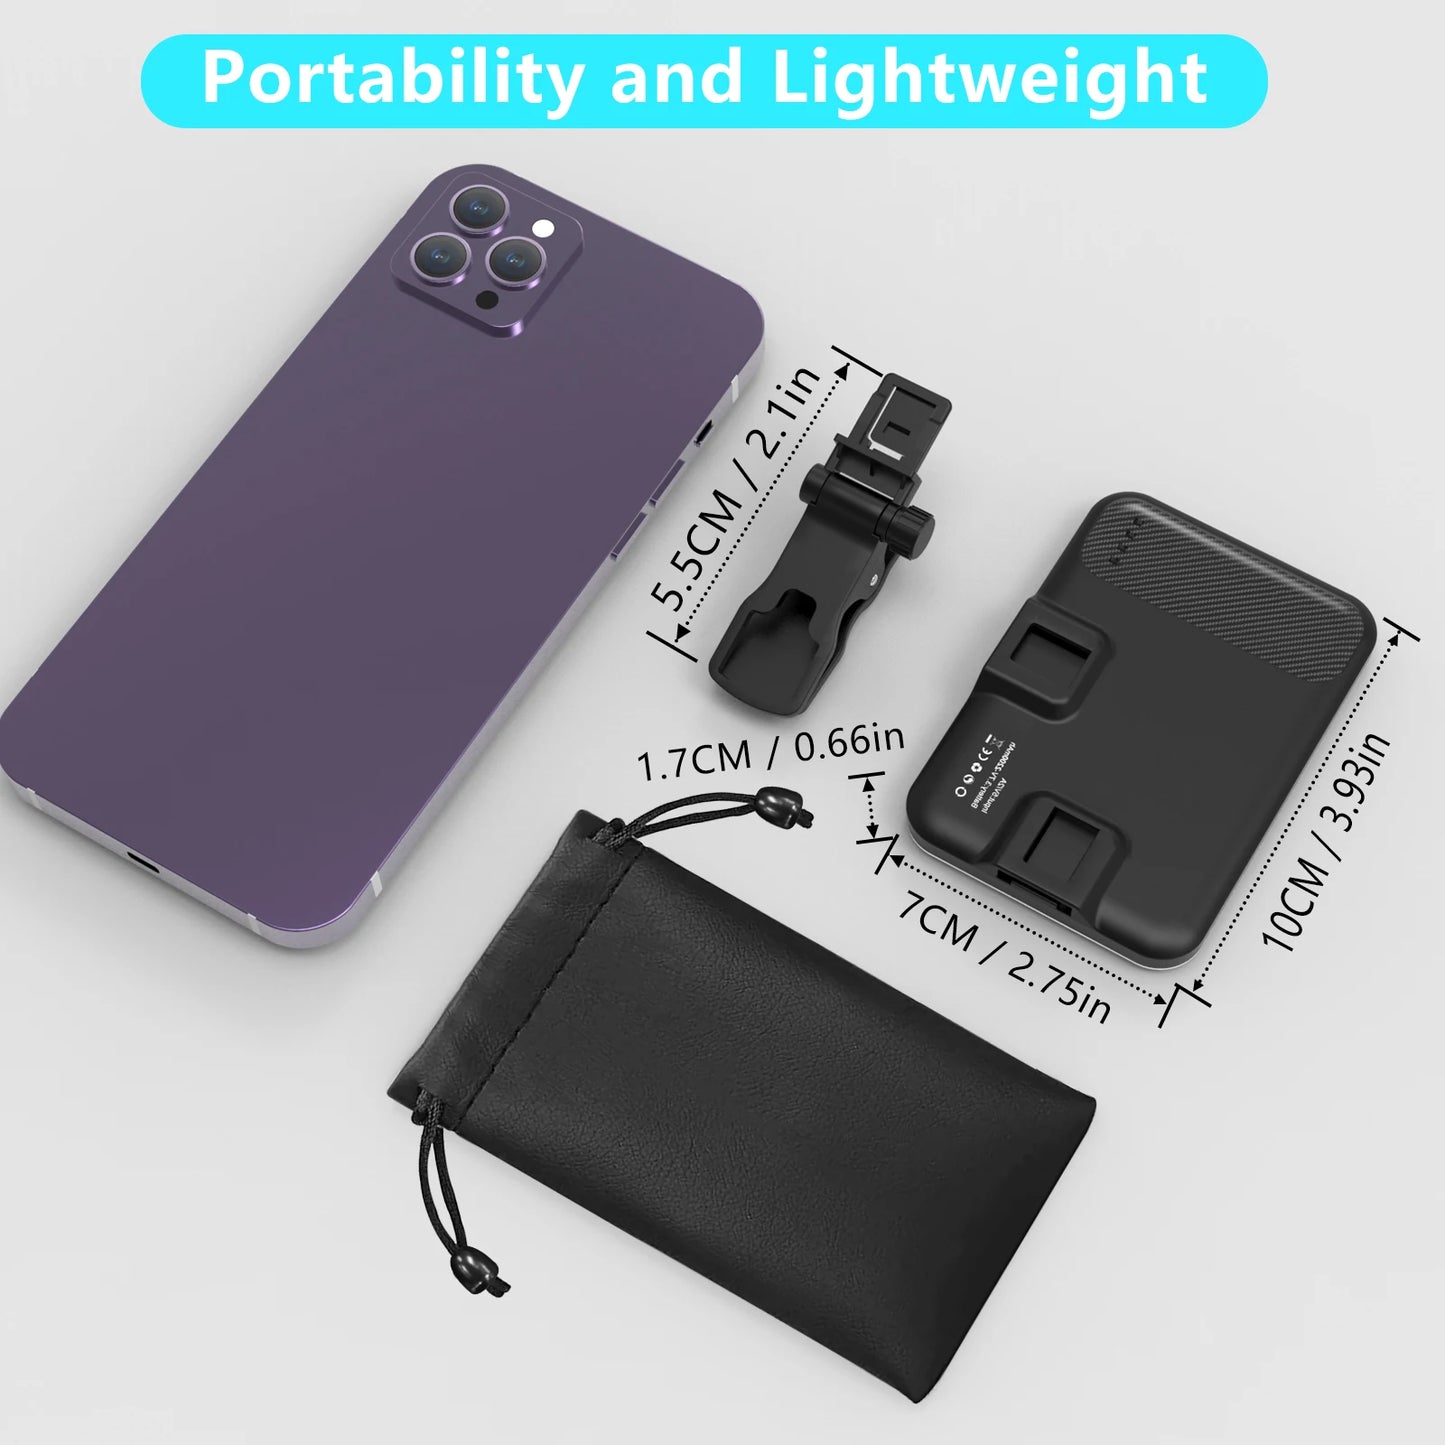 LED Selfie Light 60 High-Quality LED Beads 2200Mah Rechargeable CRI 97+, 7 Light Modes Portable on Light for Phone/Tablet/Laptop